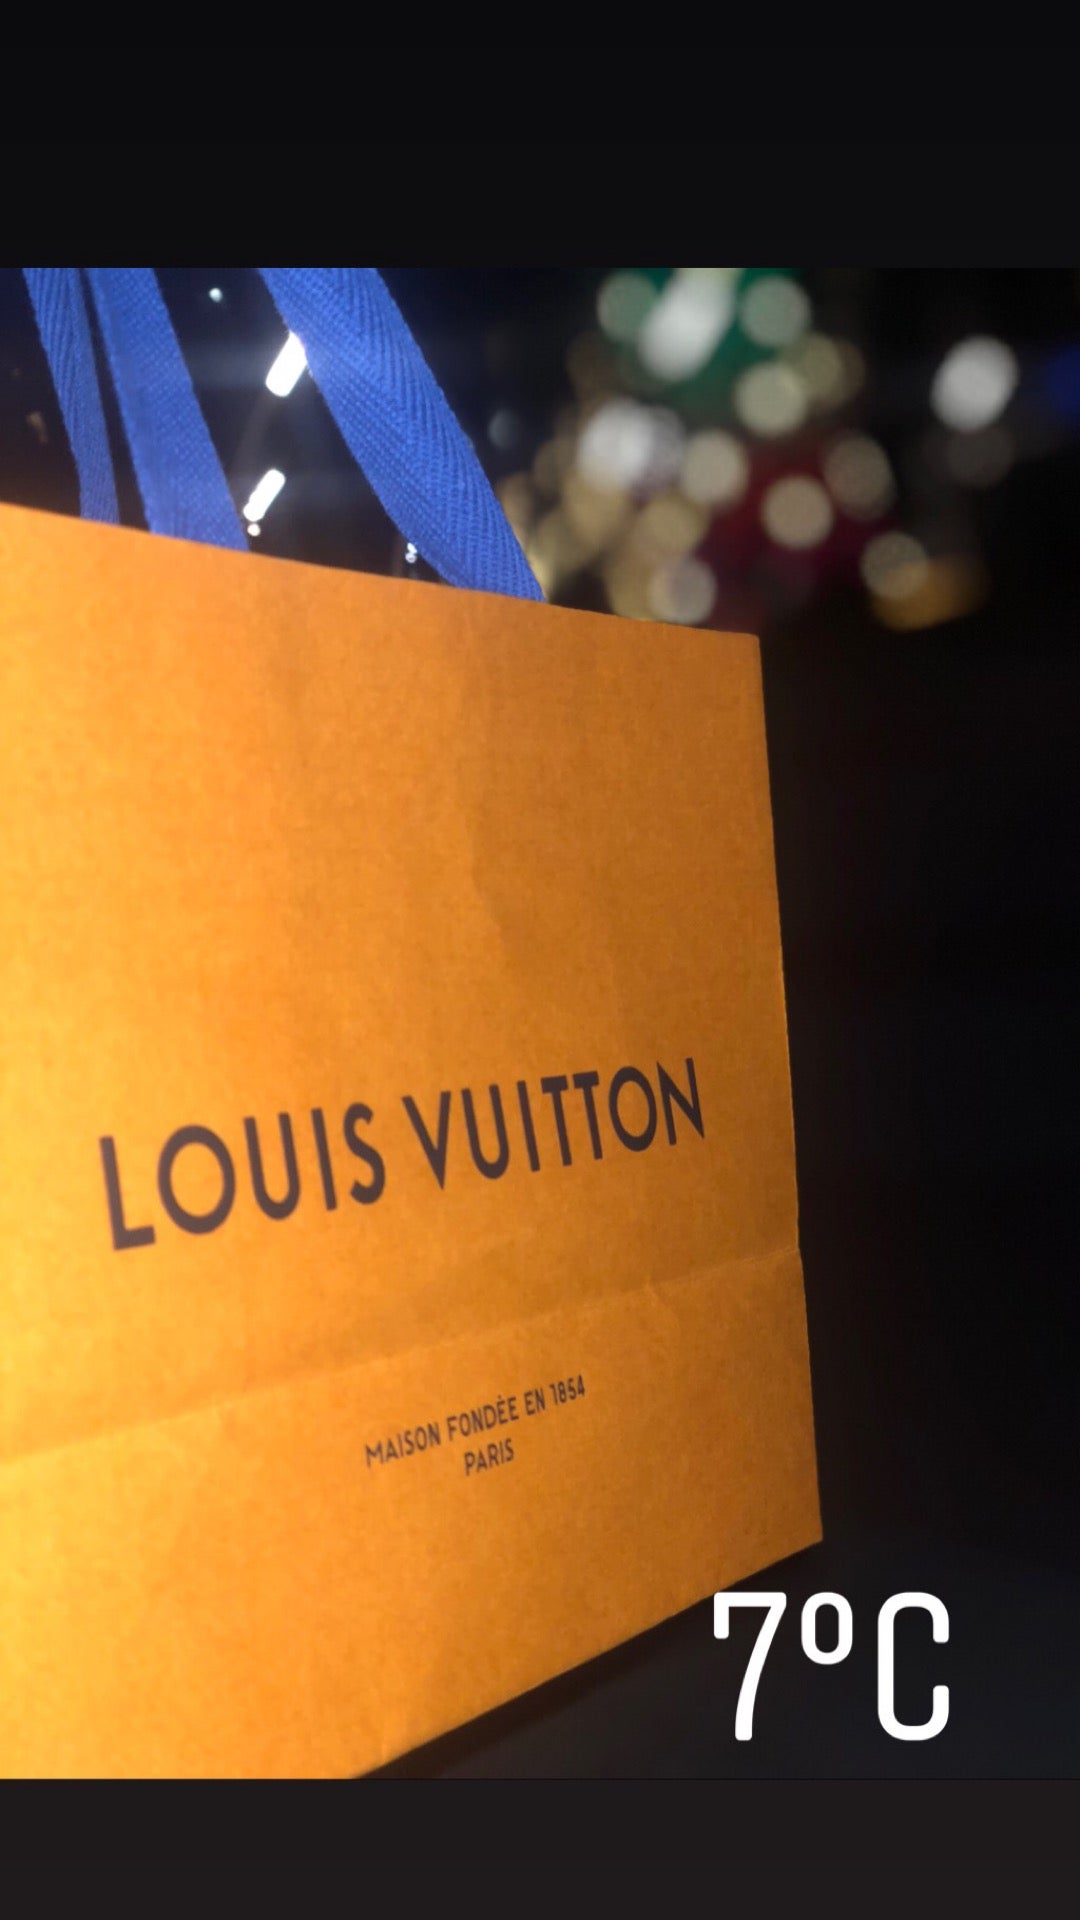 Louis Vuitton McLean Tysons Corner Bloomingdale's, 8100 Tysons